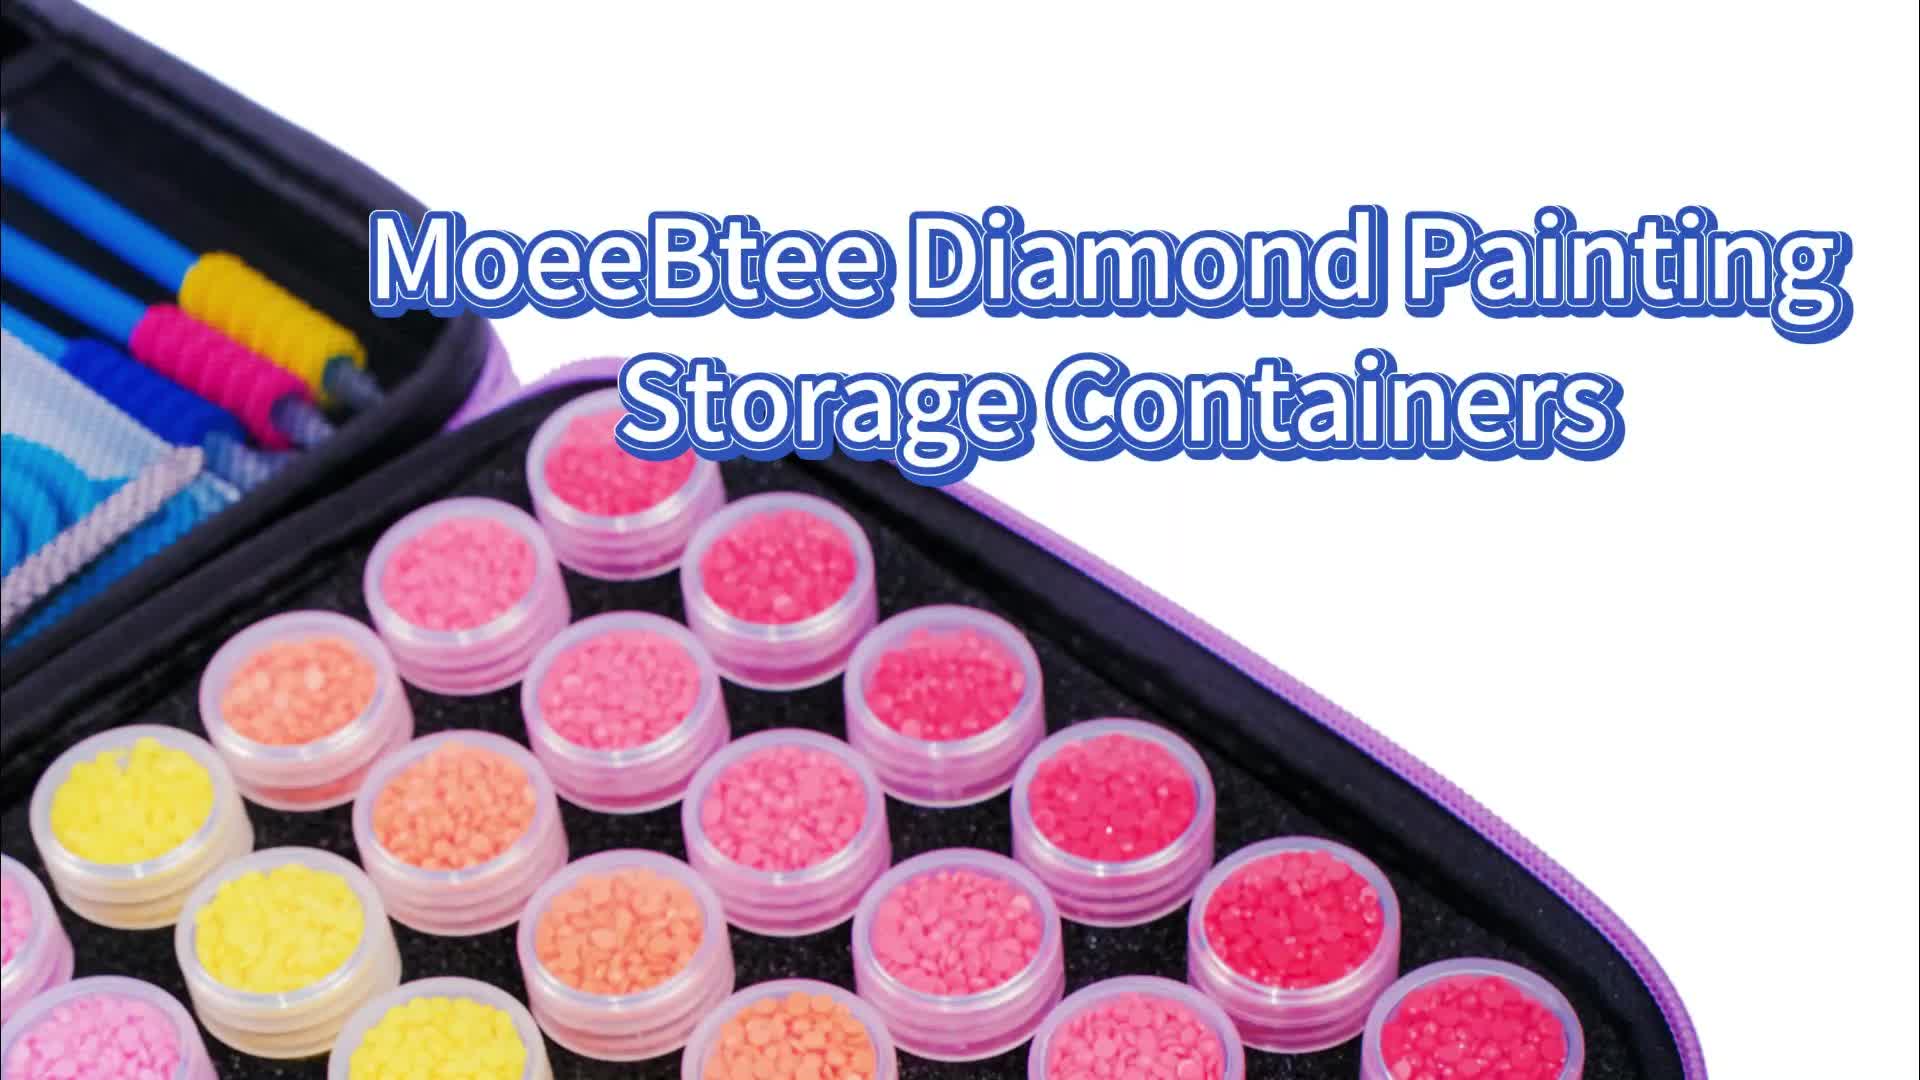  MoeeBtee Diamond Painting Storage Containers, 30 Slots